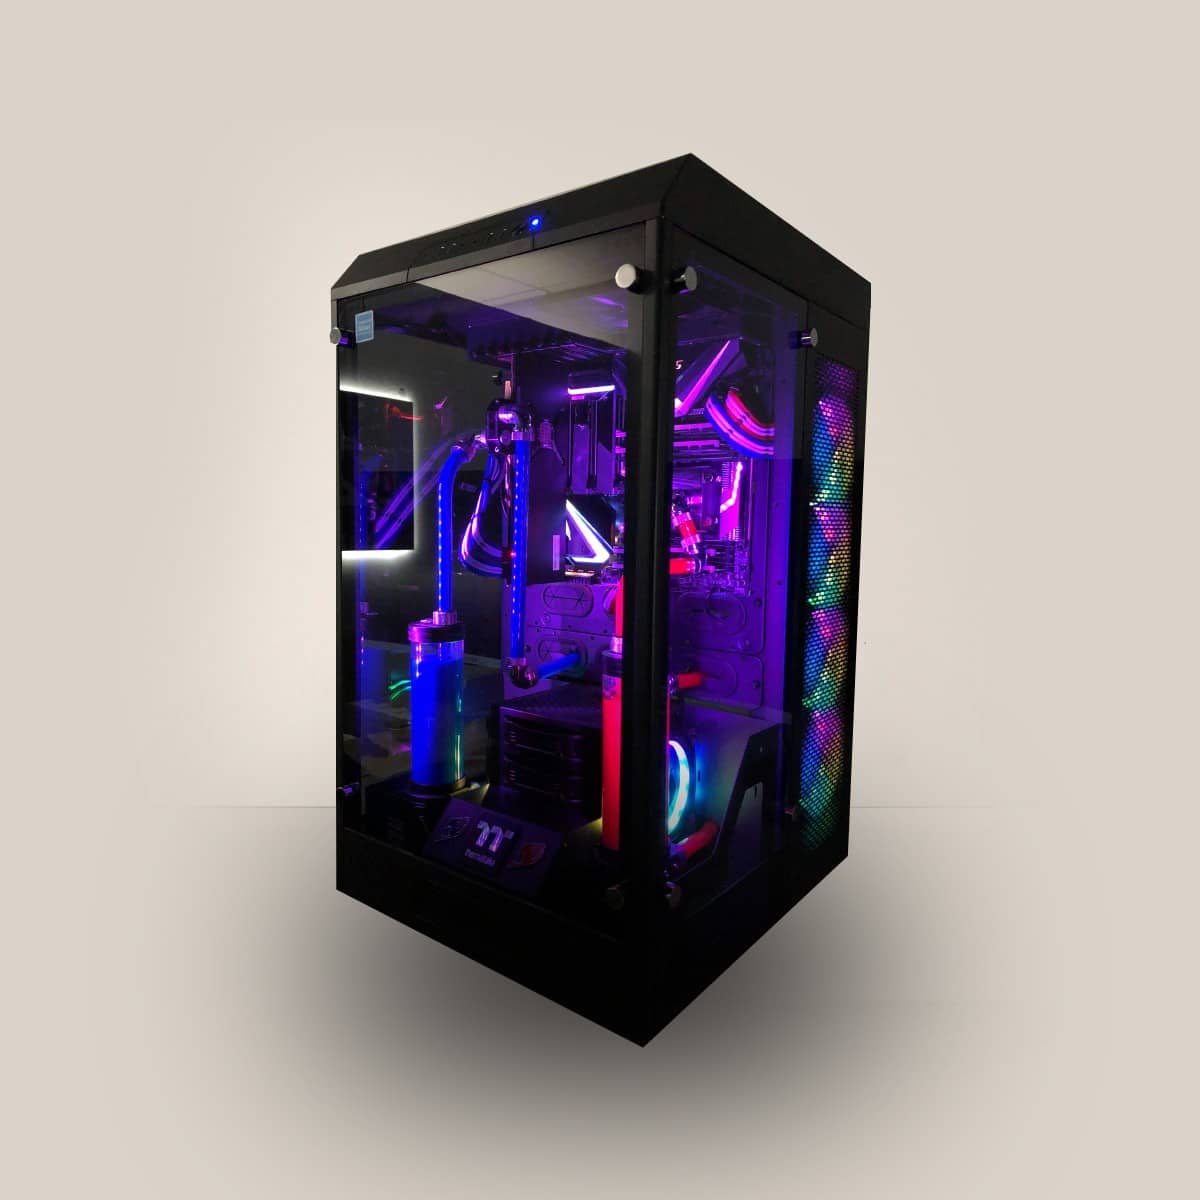 Custom AMD Threadripper Water Cooled PC